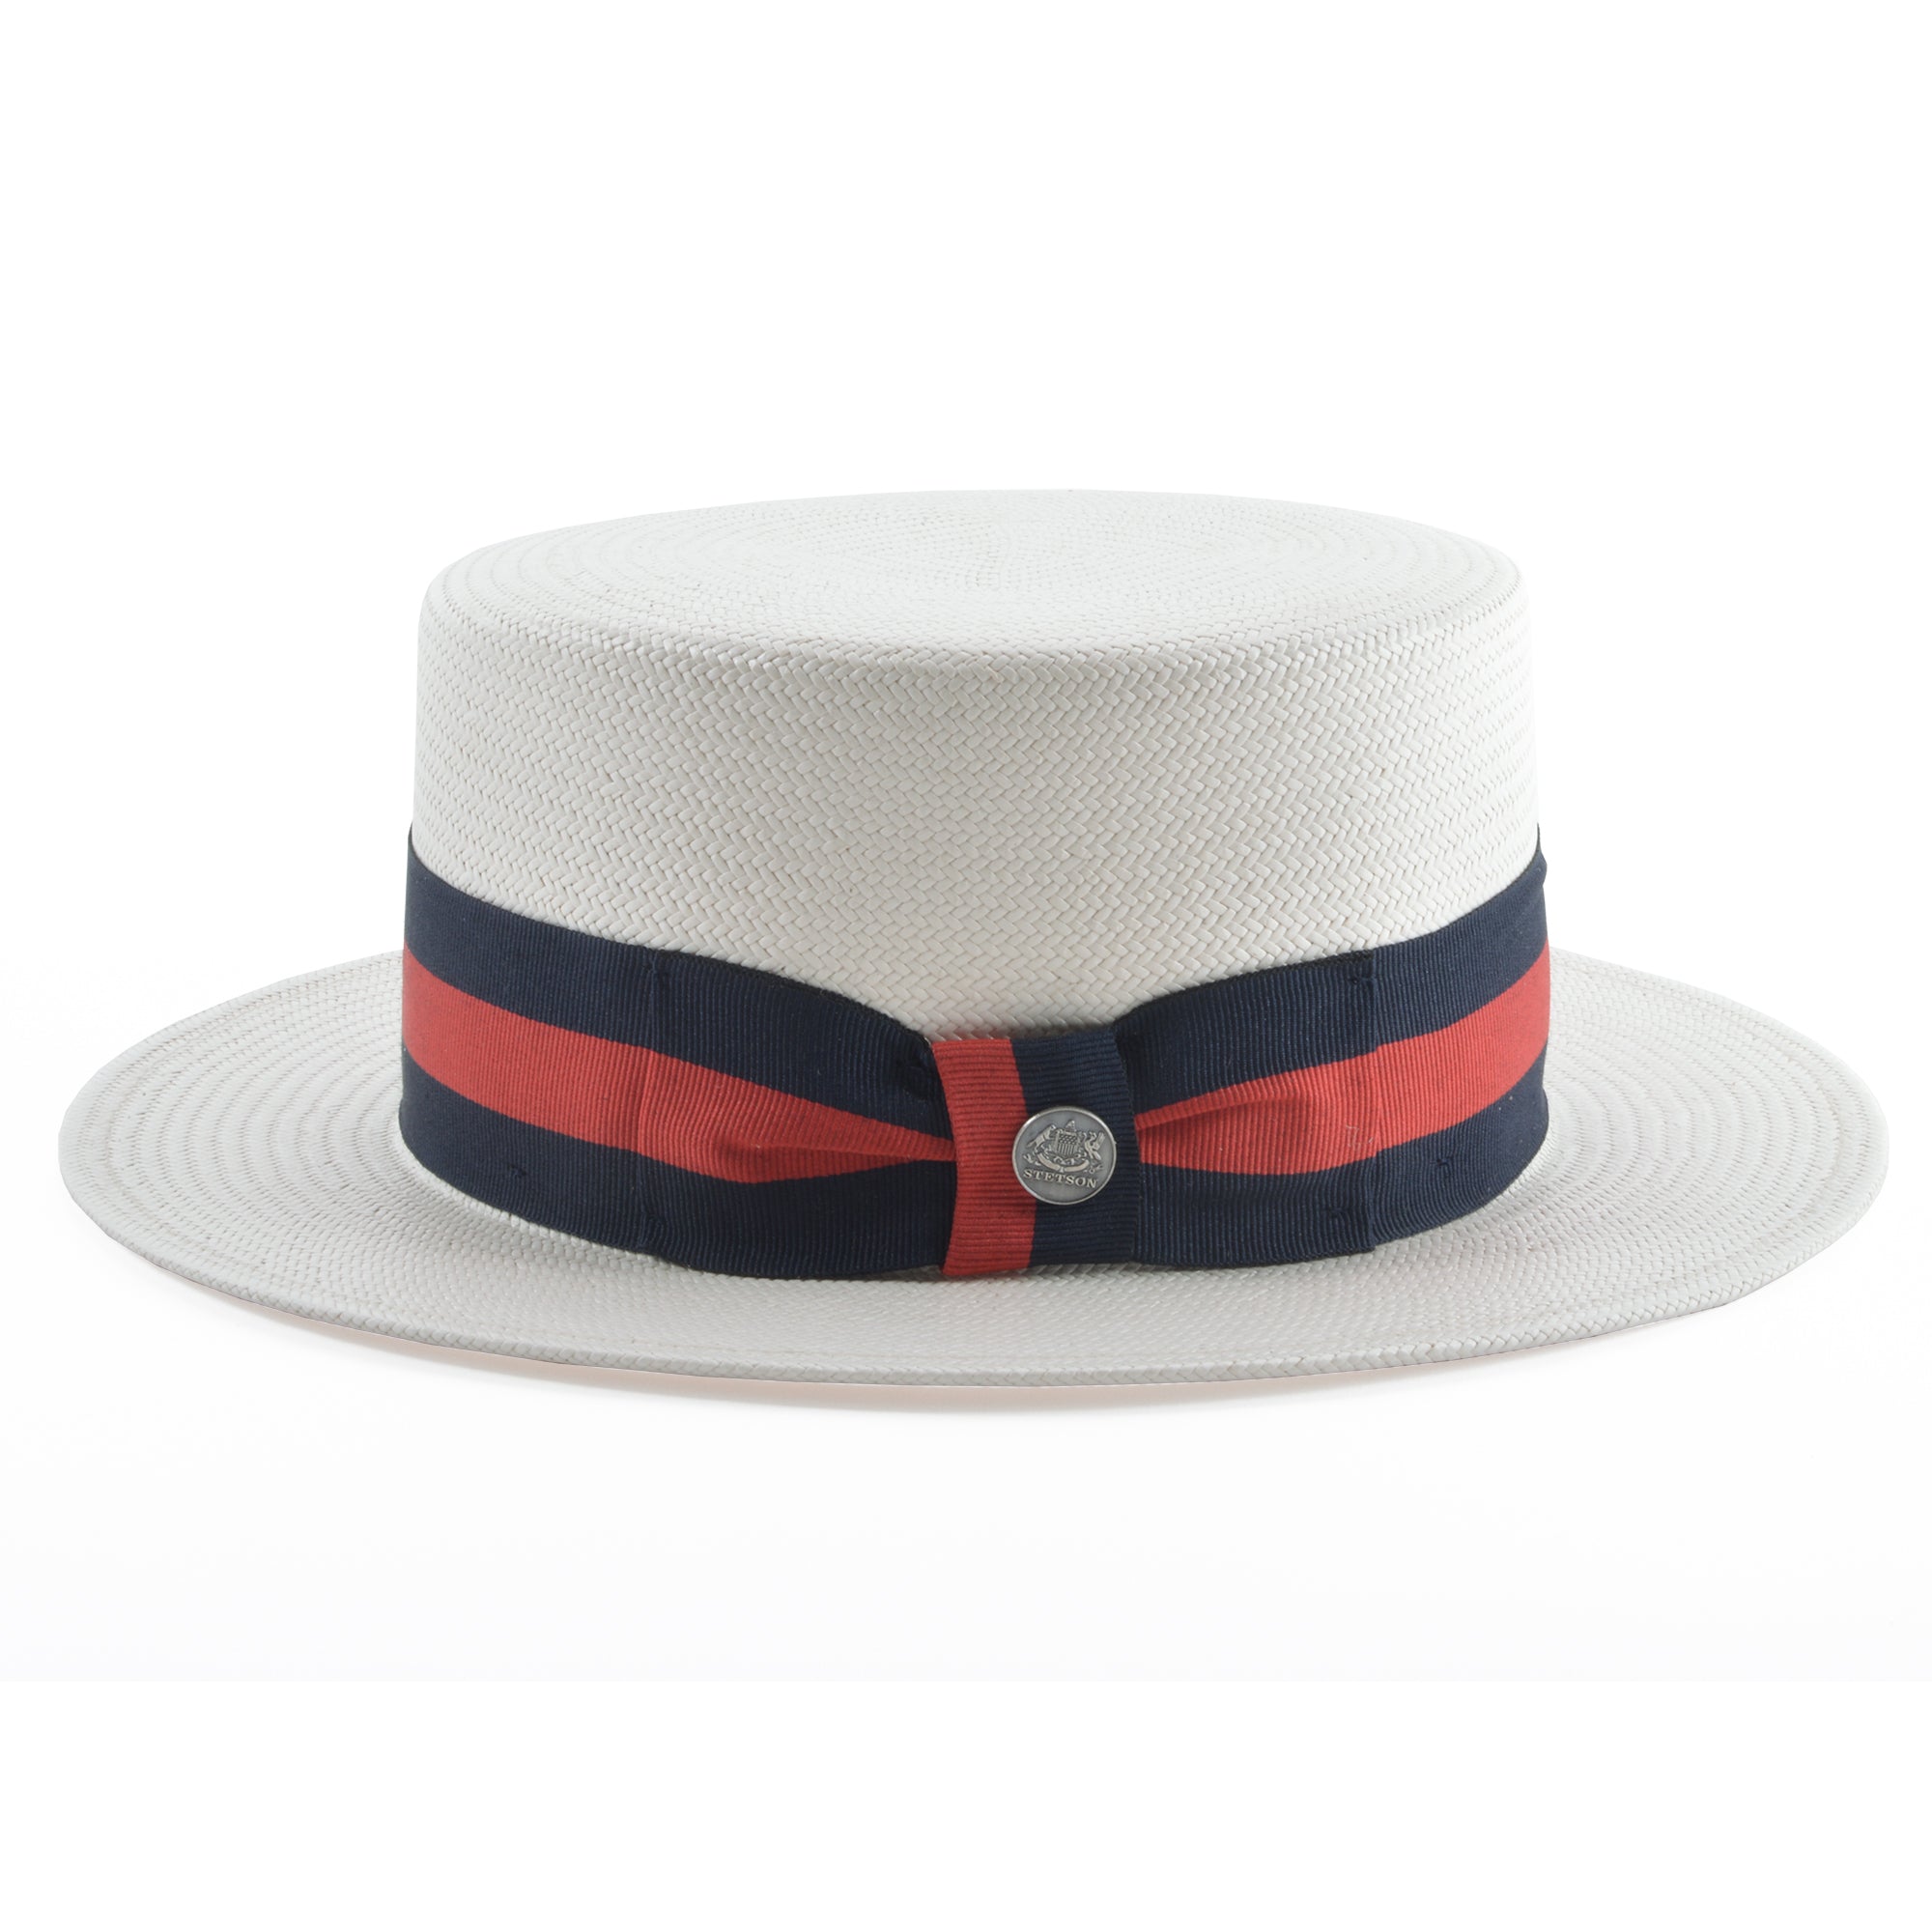 Stetson Keeneland Shantung Straw Boater Hat